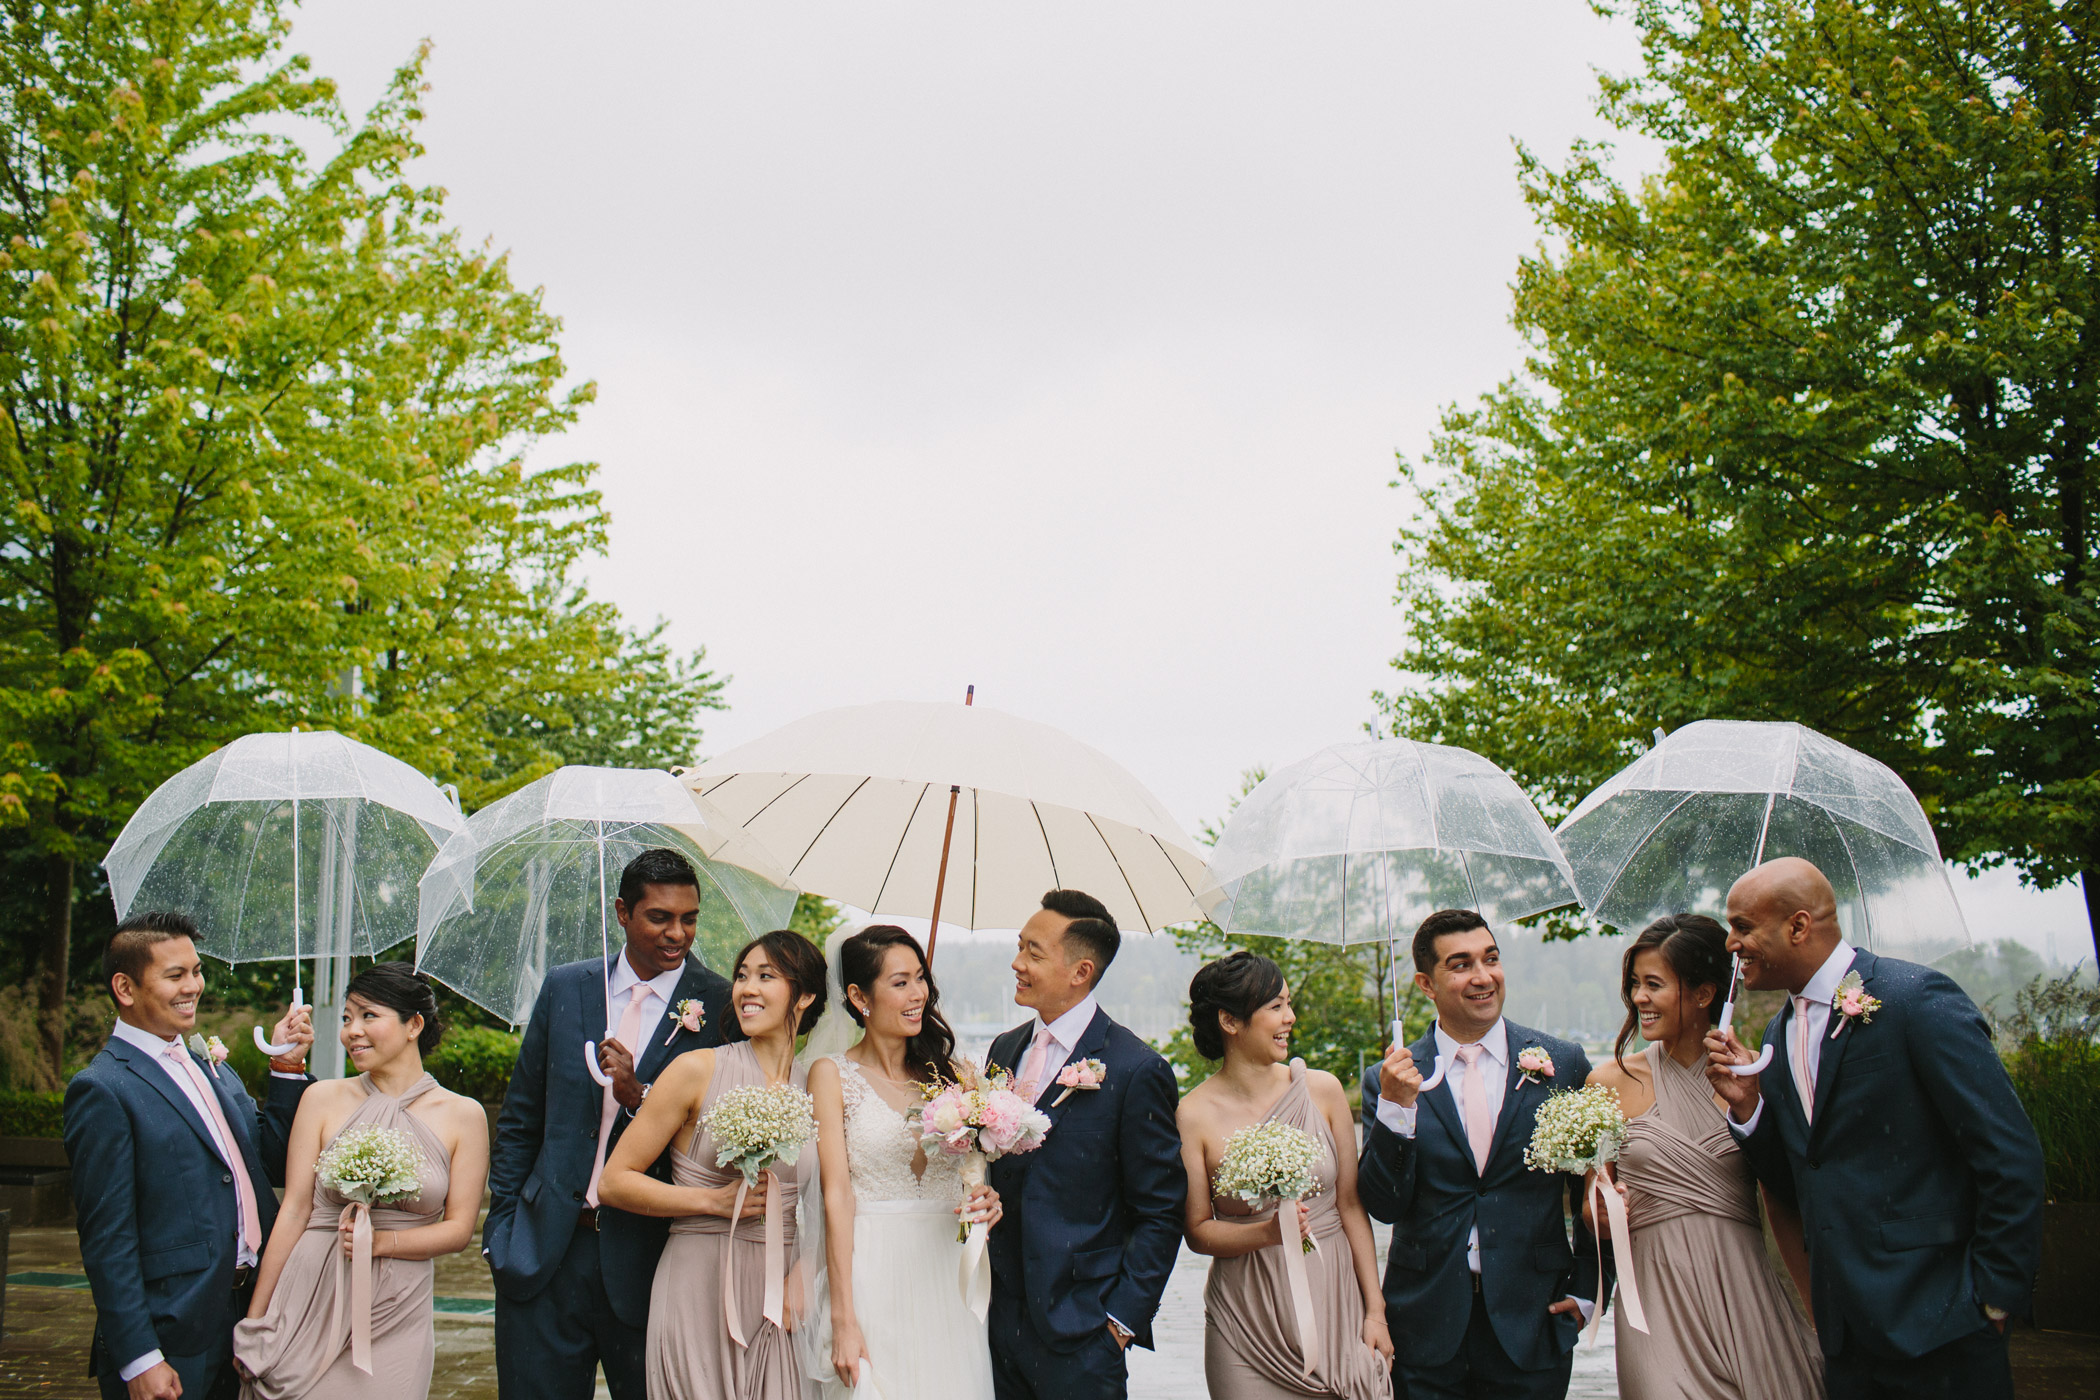 Vancouver Rainy Wedding Party with Umbrellas